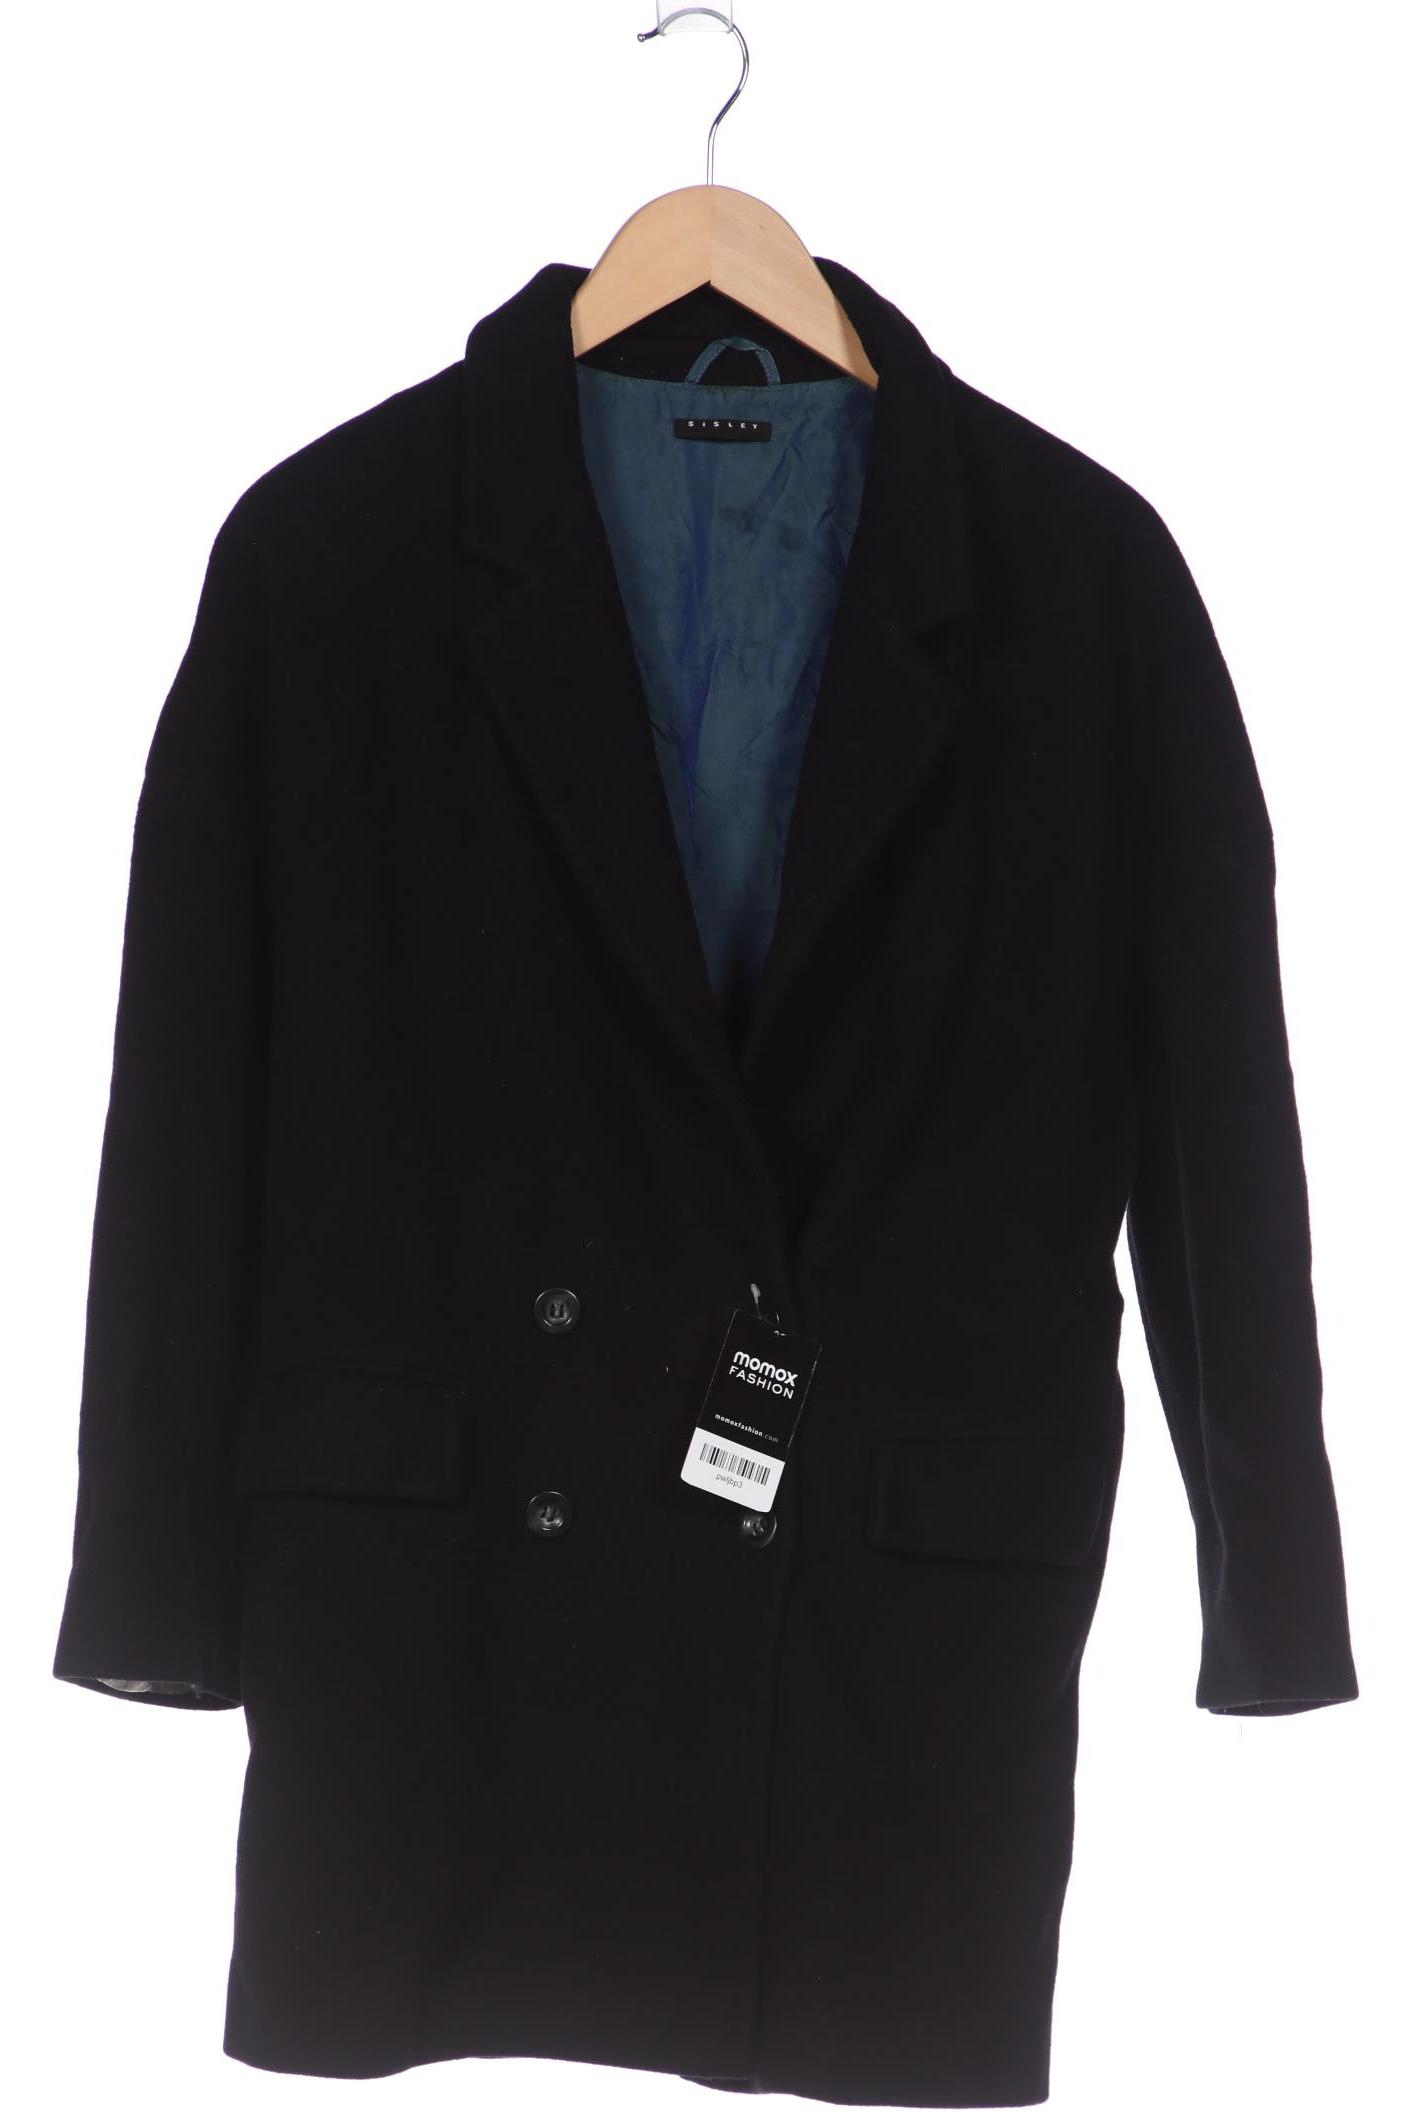 Sisley Damen Mantel, schwarz, Gr. 34 von Sisley